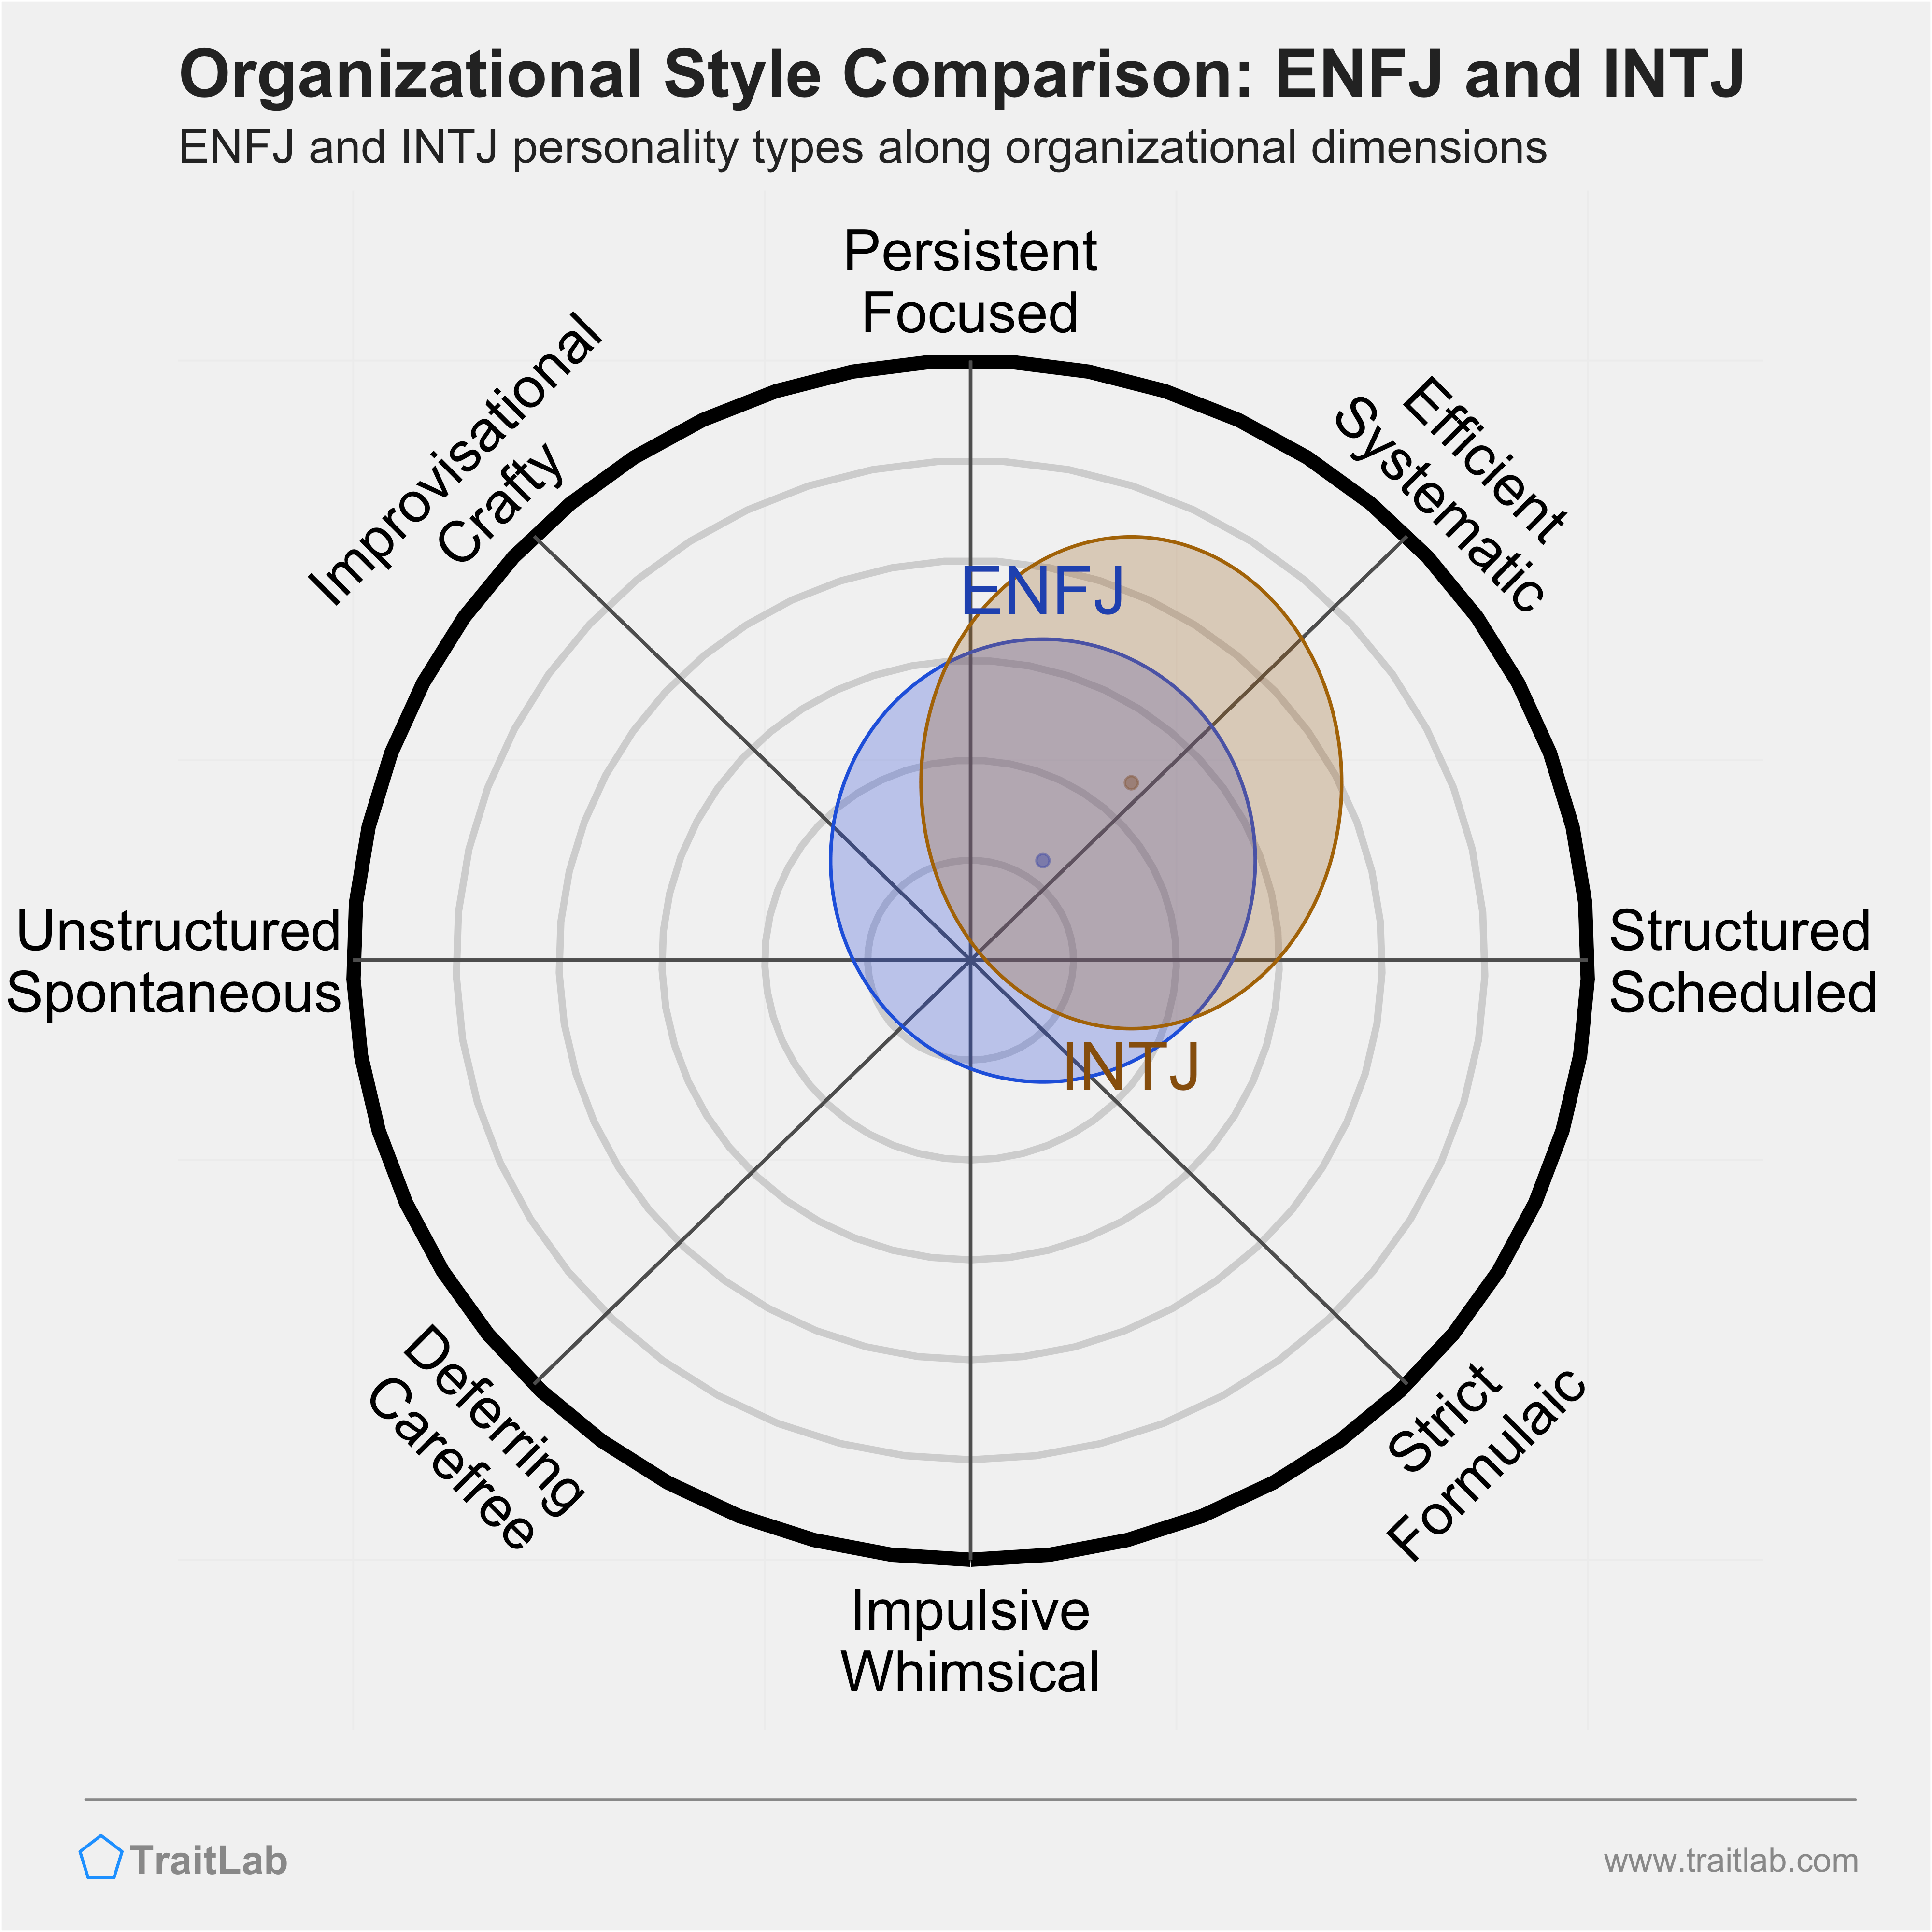 ENFJ and INTJ comparison across organizational dimensions